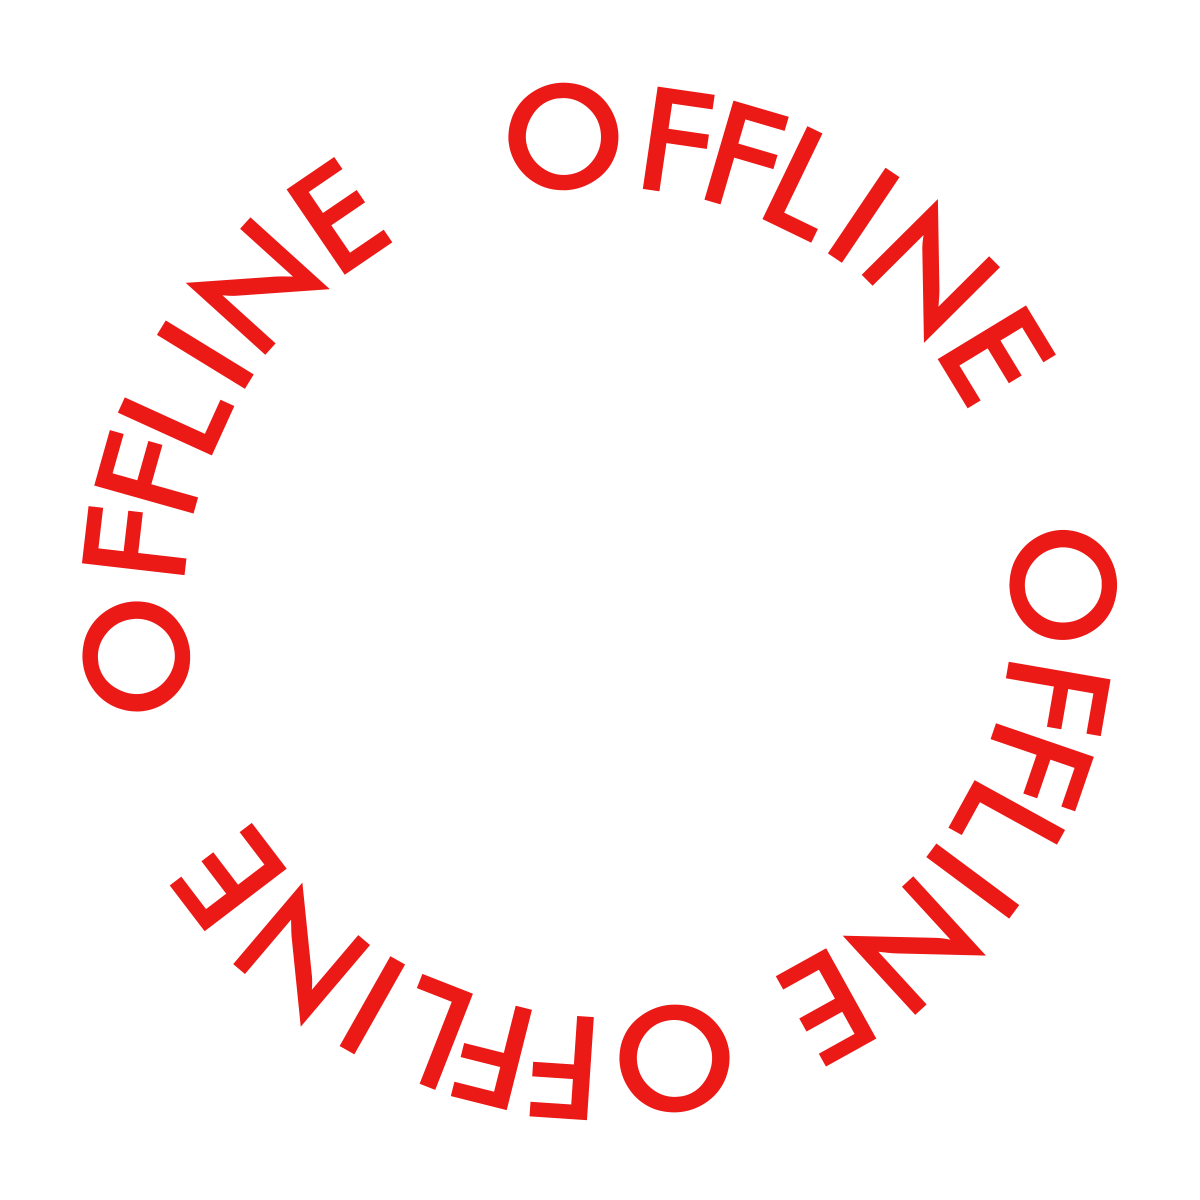 Offline data